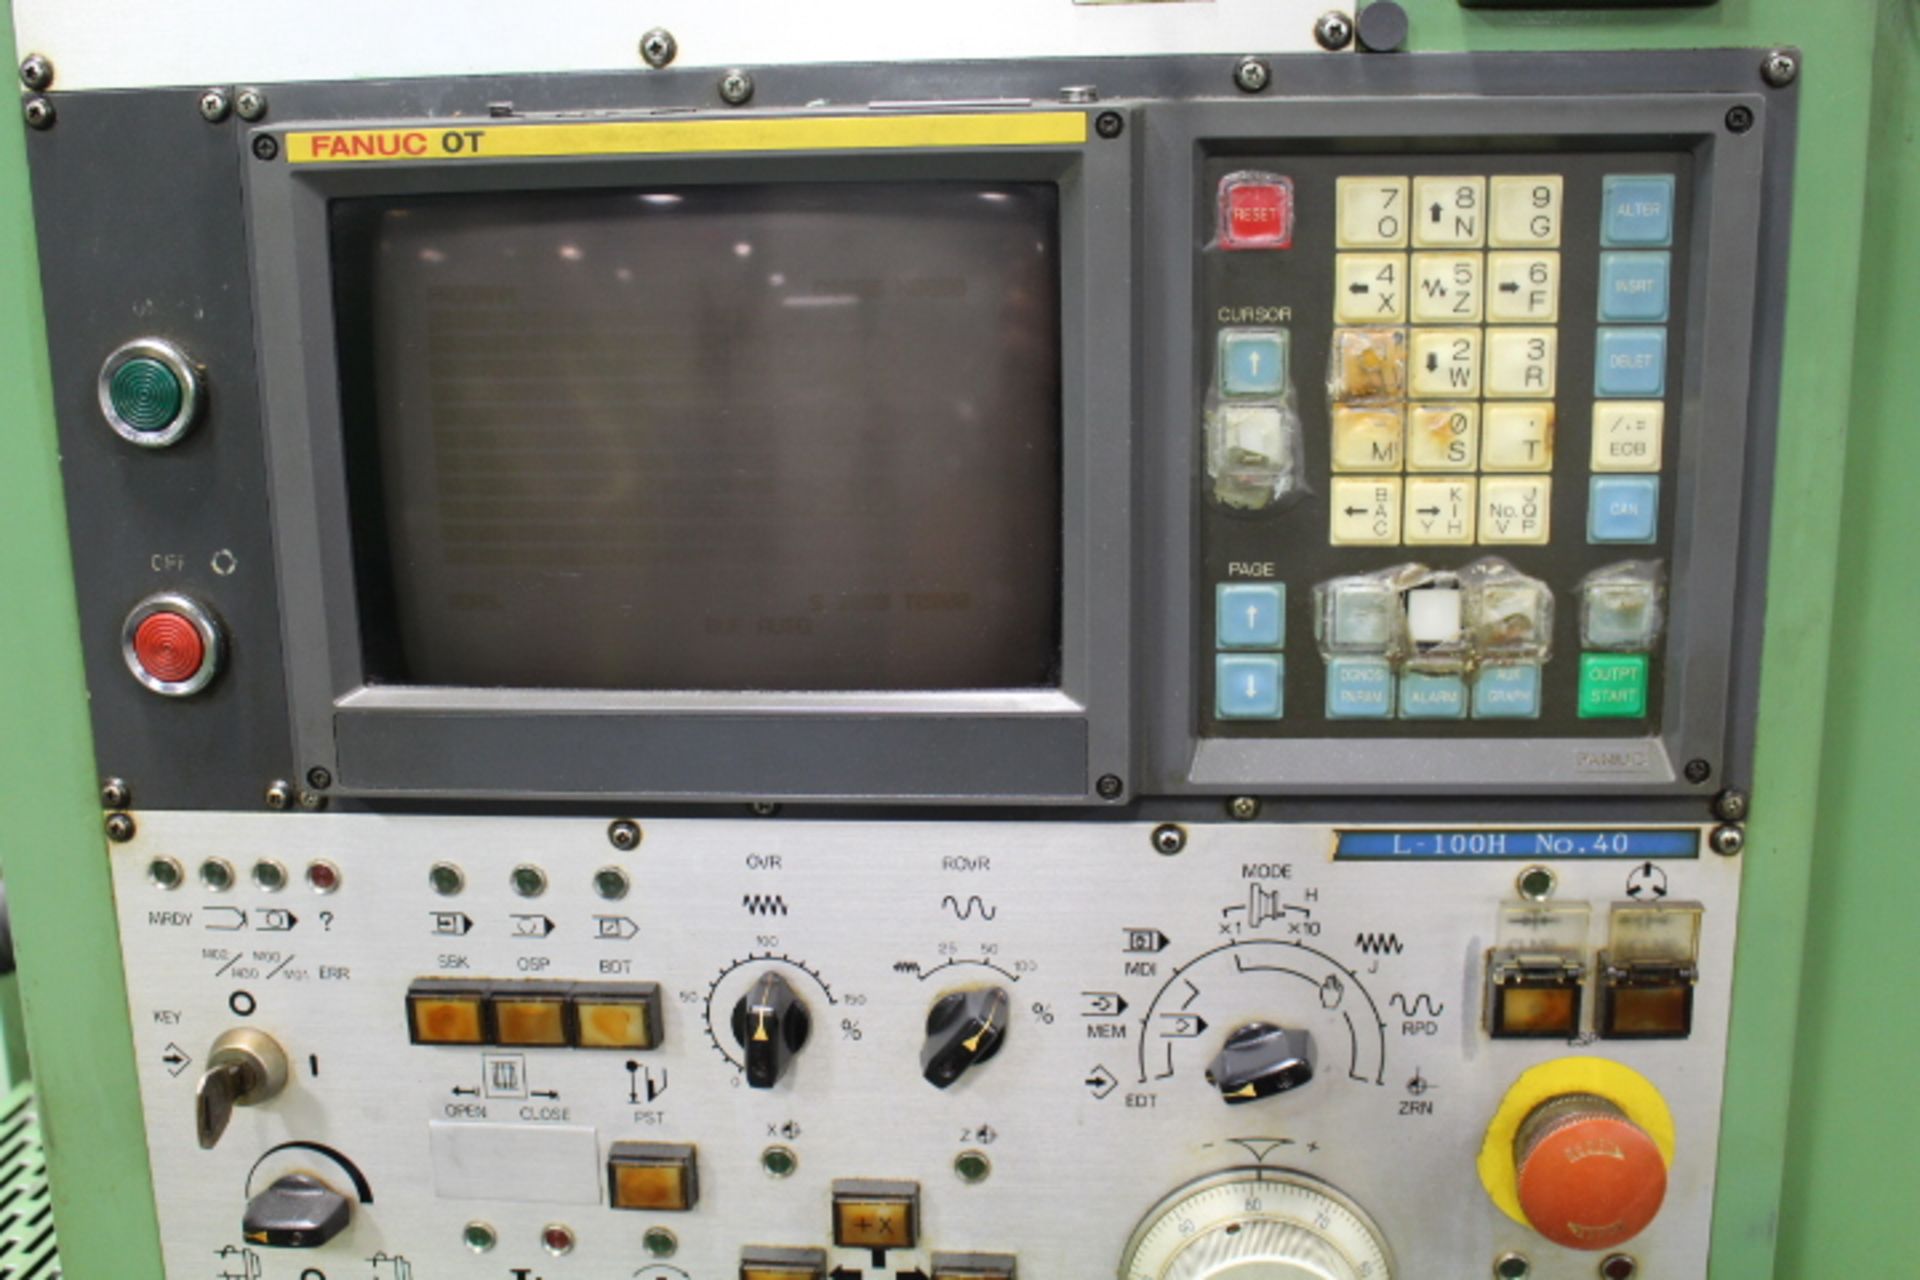 MORI SEIKI L-100H CNC MILL/TURNING CENTER, FANUC OT CNC CONTROL, S/N 40 - Image 6 of 9